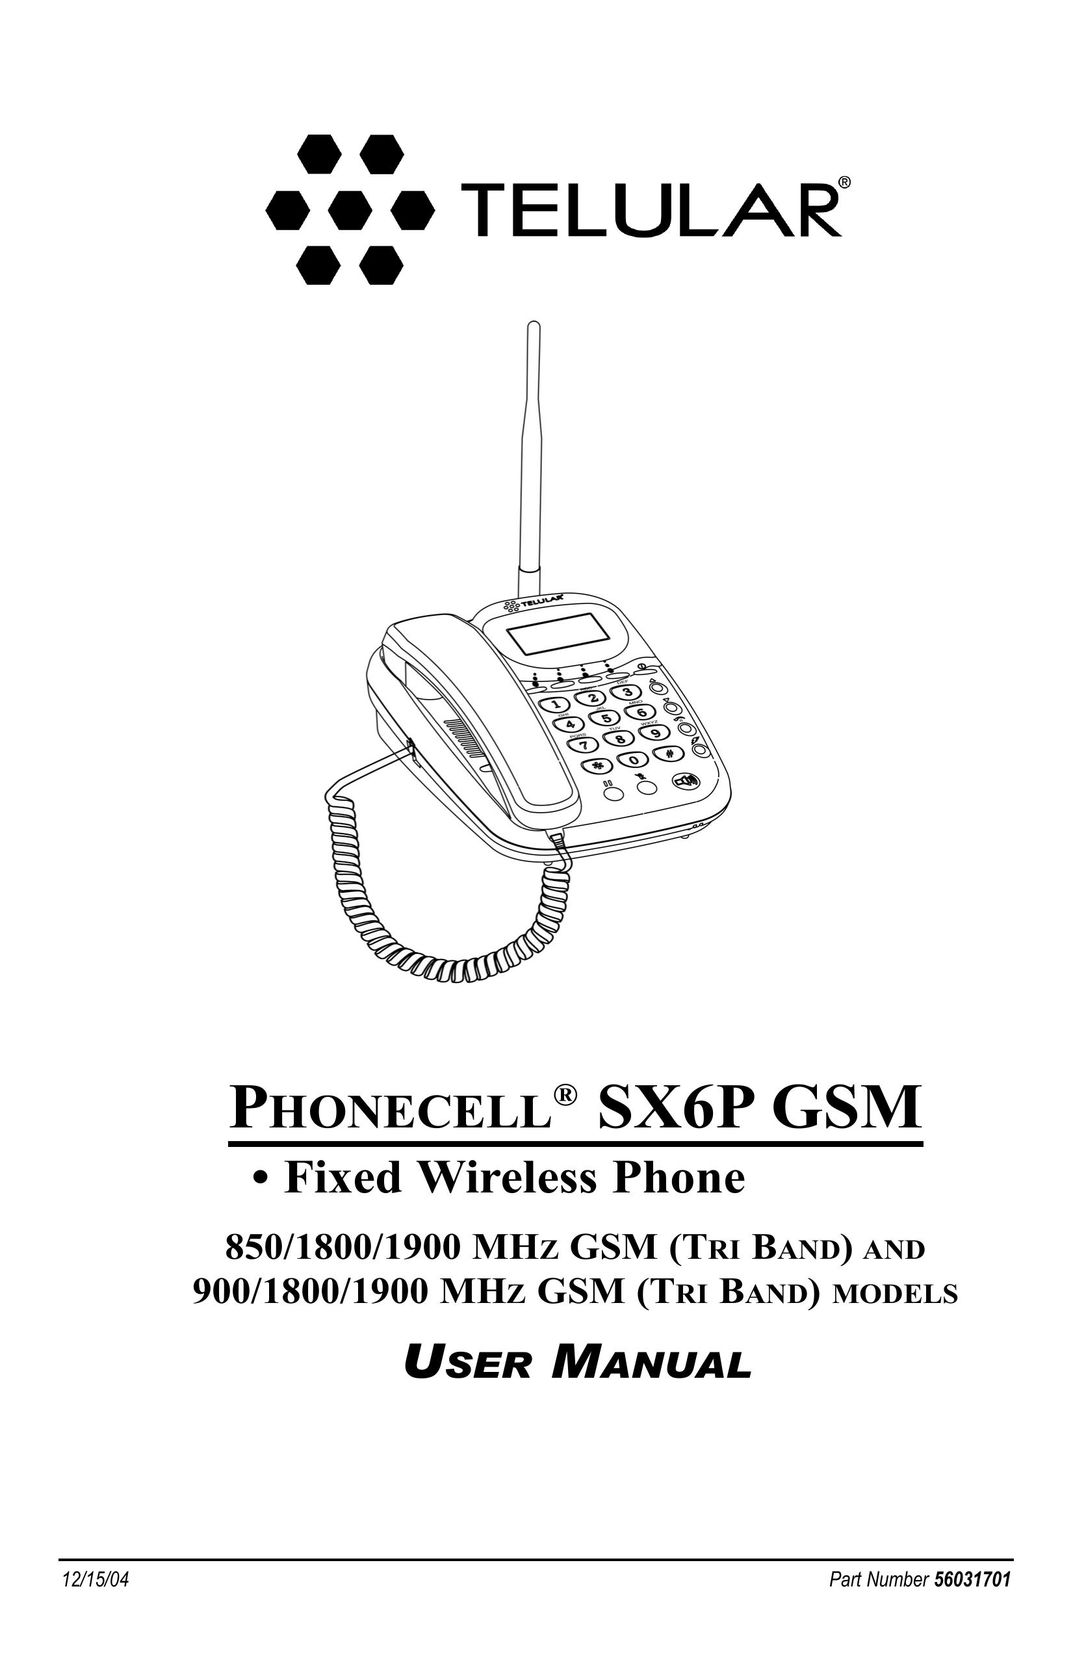 Telular 900, 1800, 1900 Cell Phone User Manual